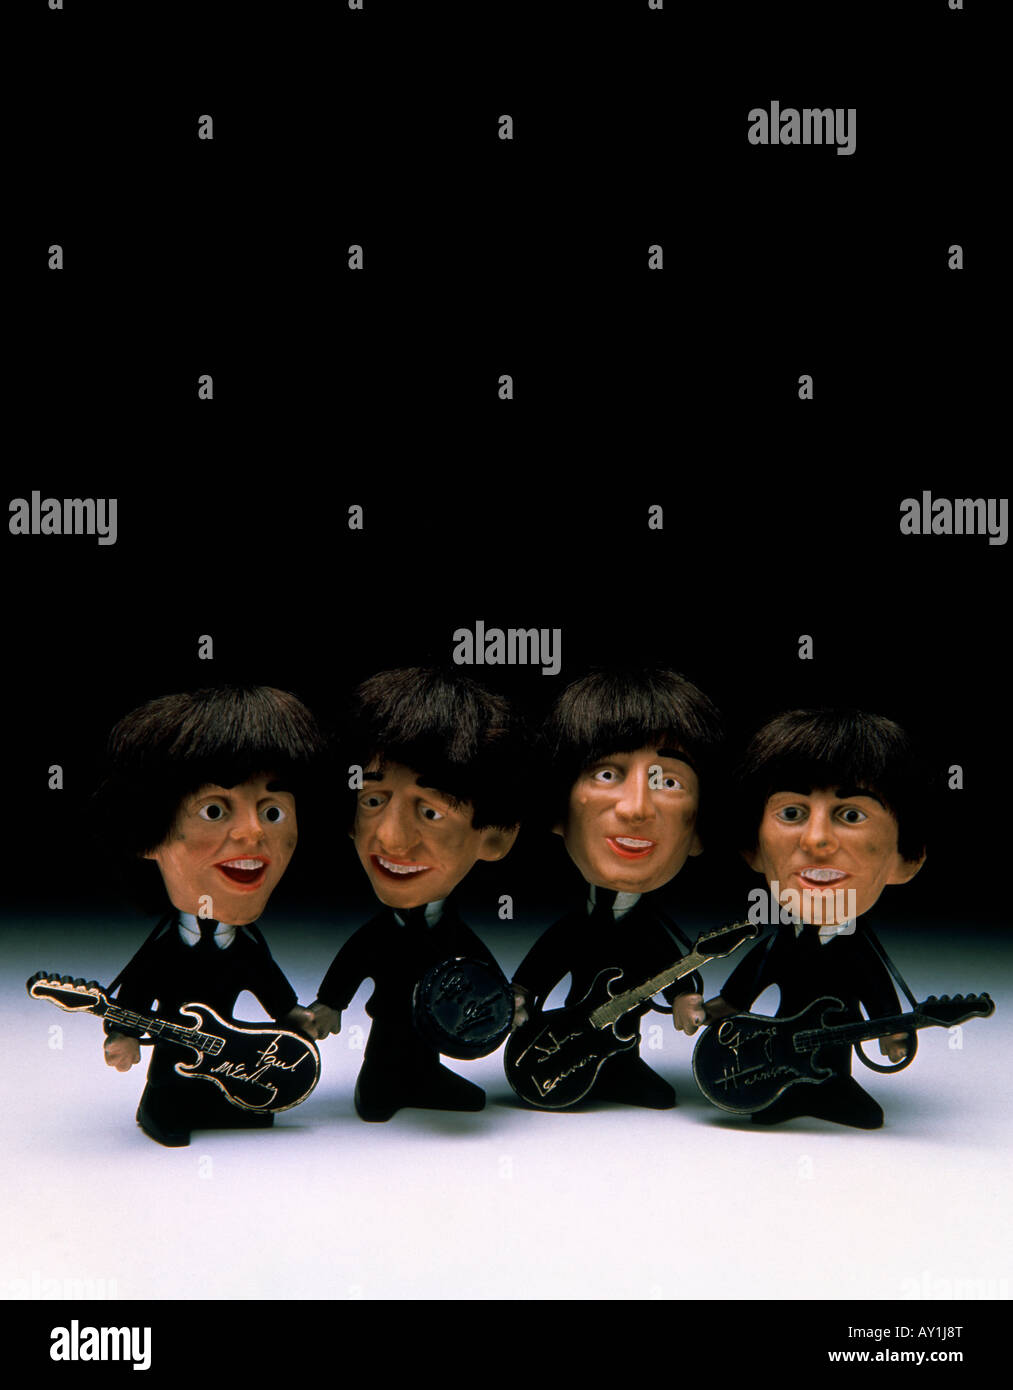 Beatles-Puppen Sammlerstücke Erinnerungsstücke Stockfotografie - Alamy